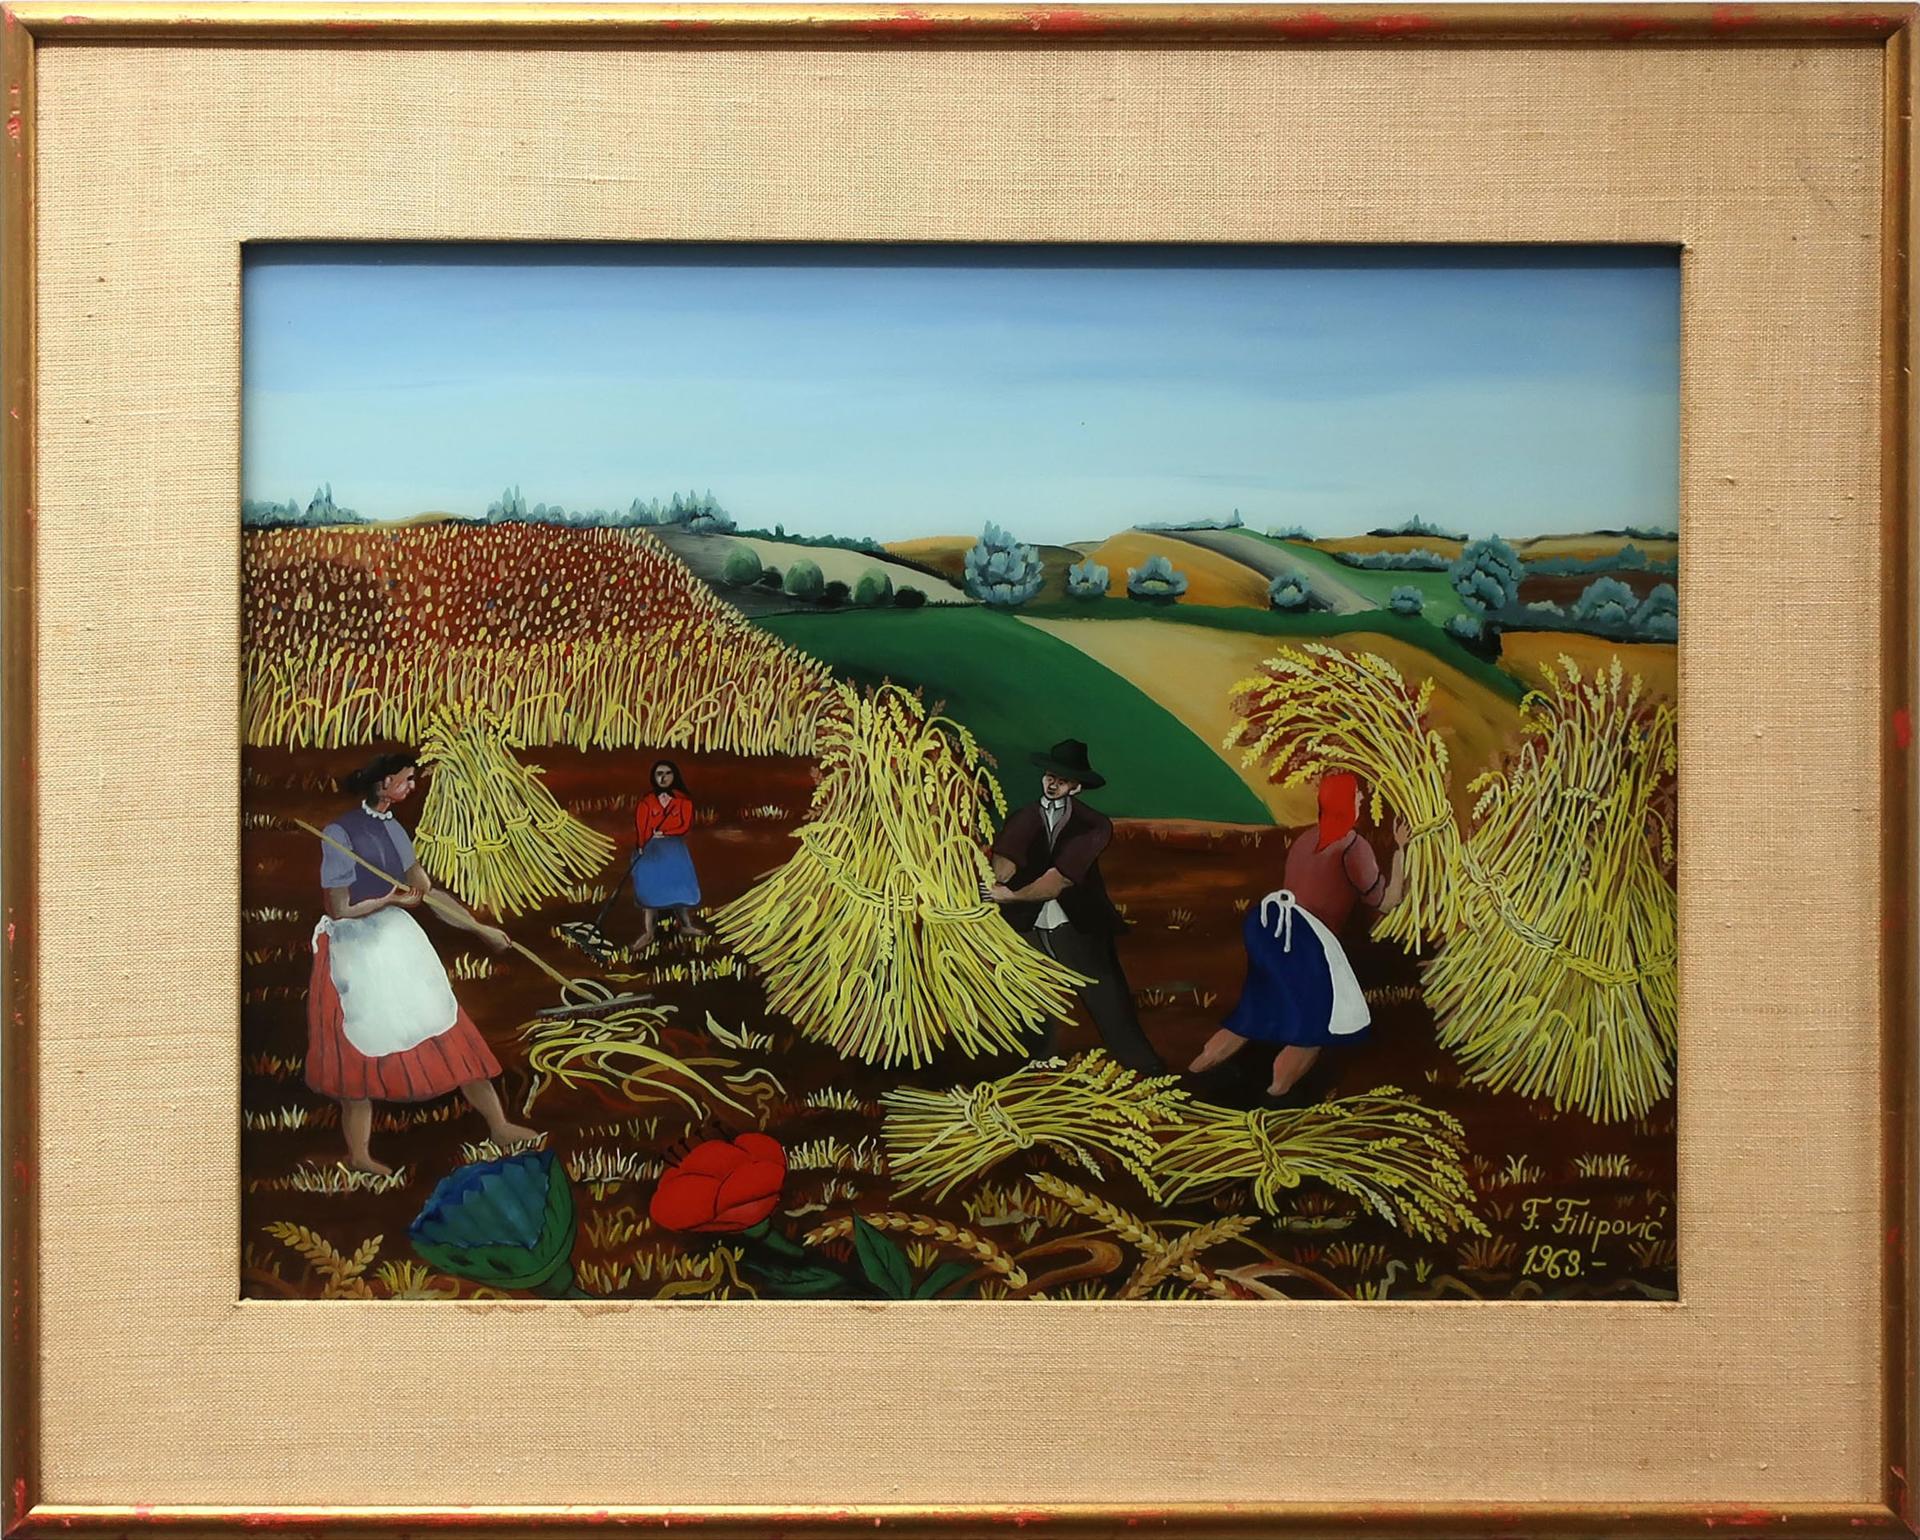 Franjo Filipovic - Untitled (Harvest Time)